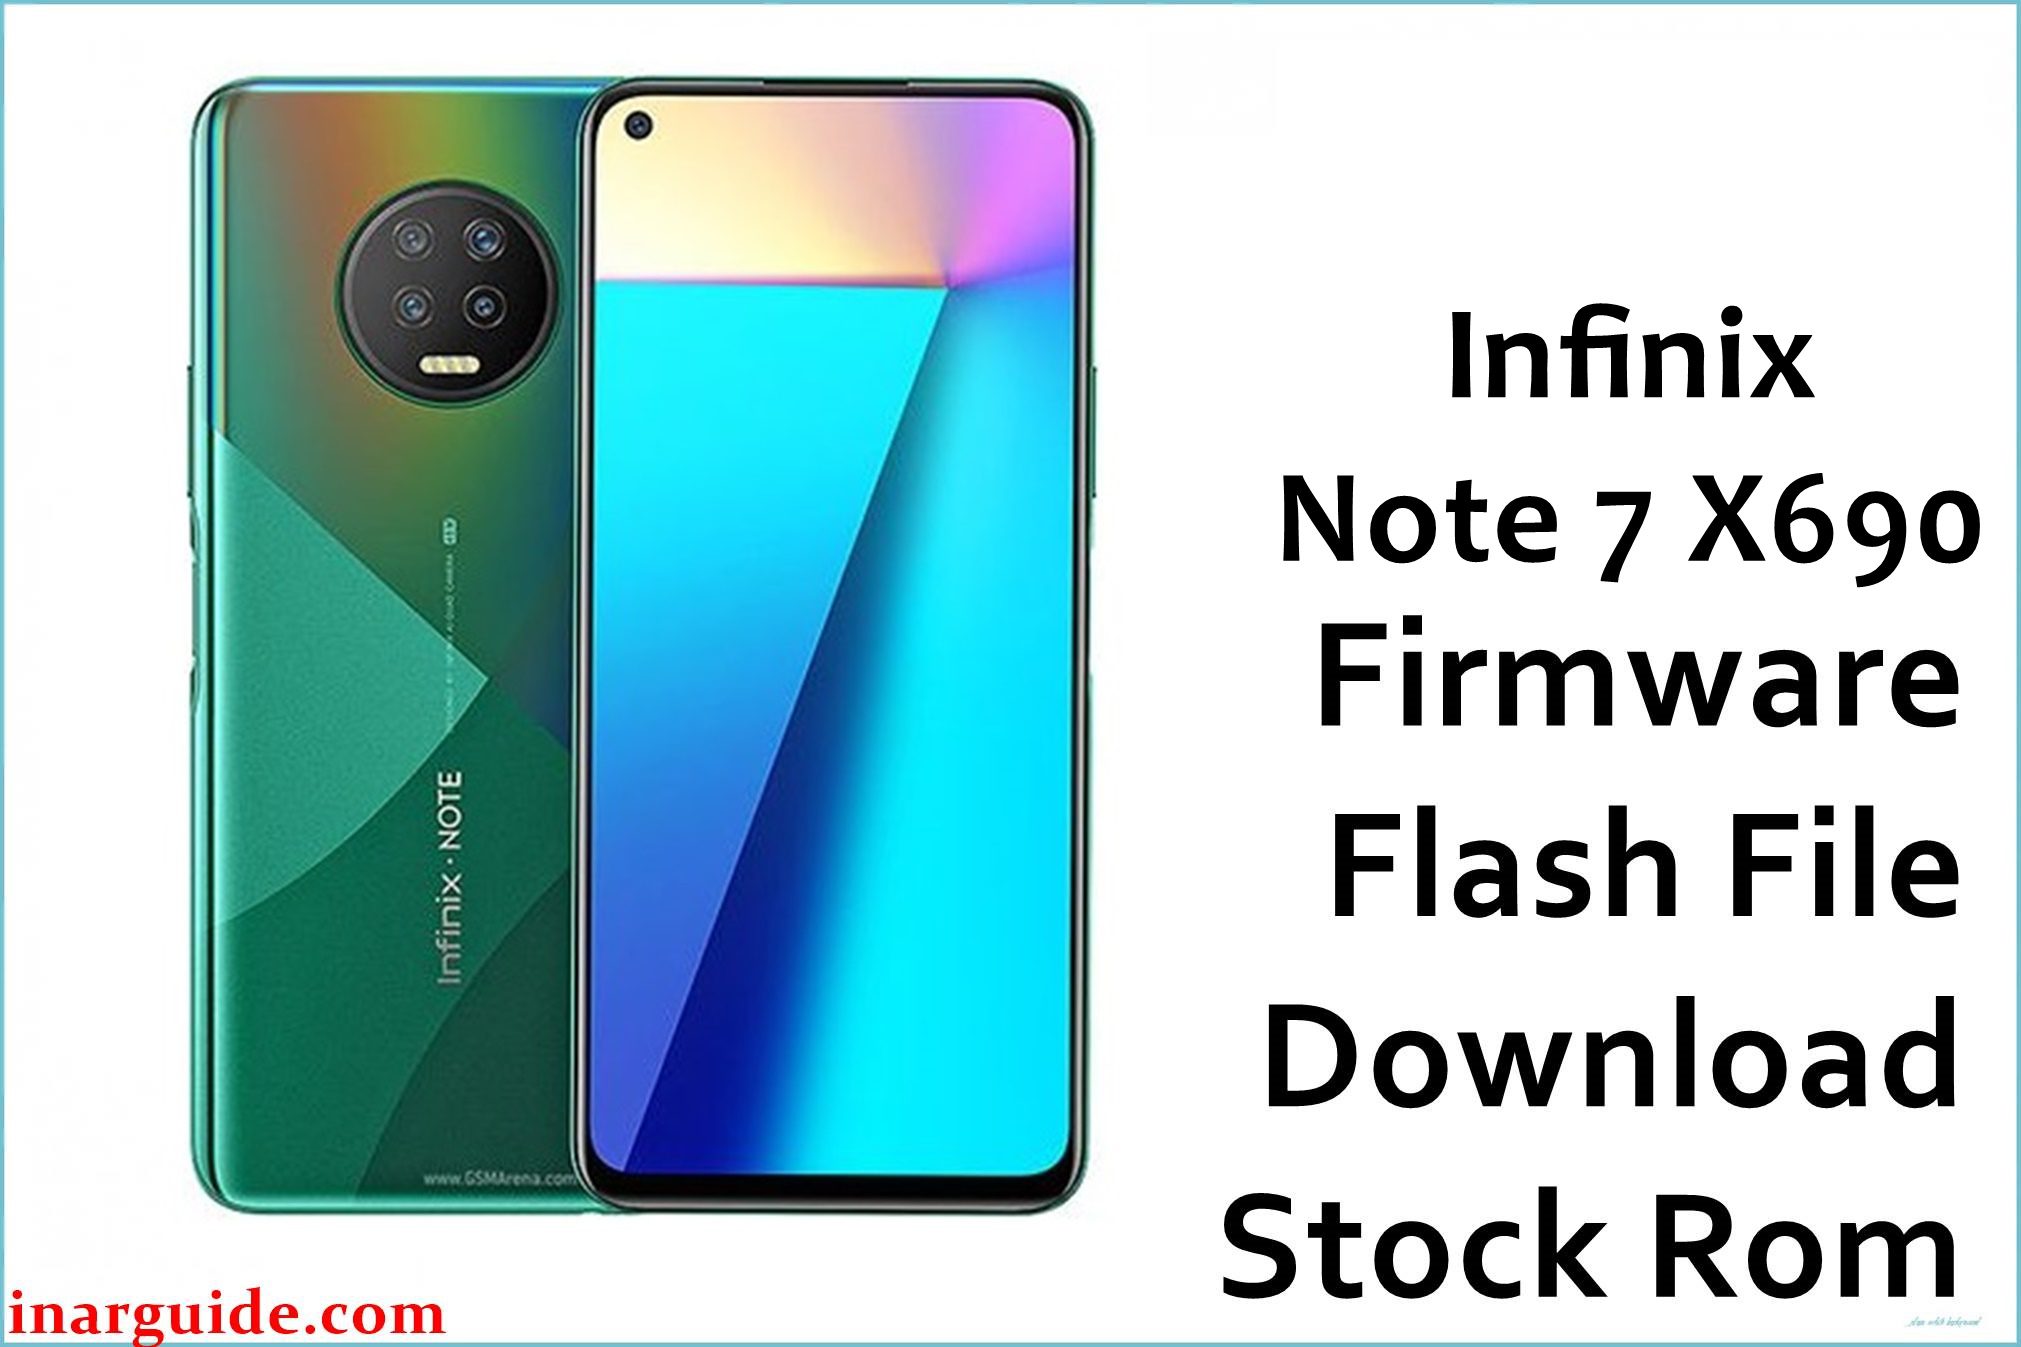 Infinix Note 7 X690